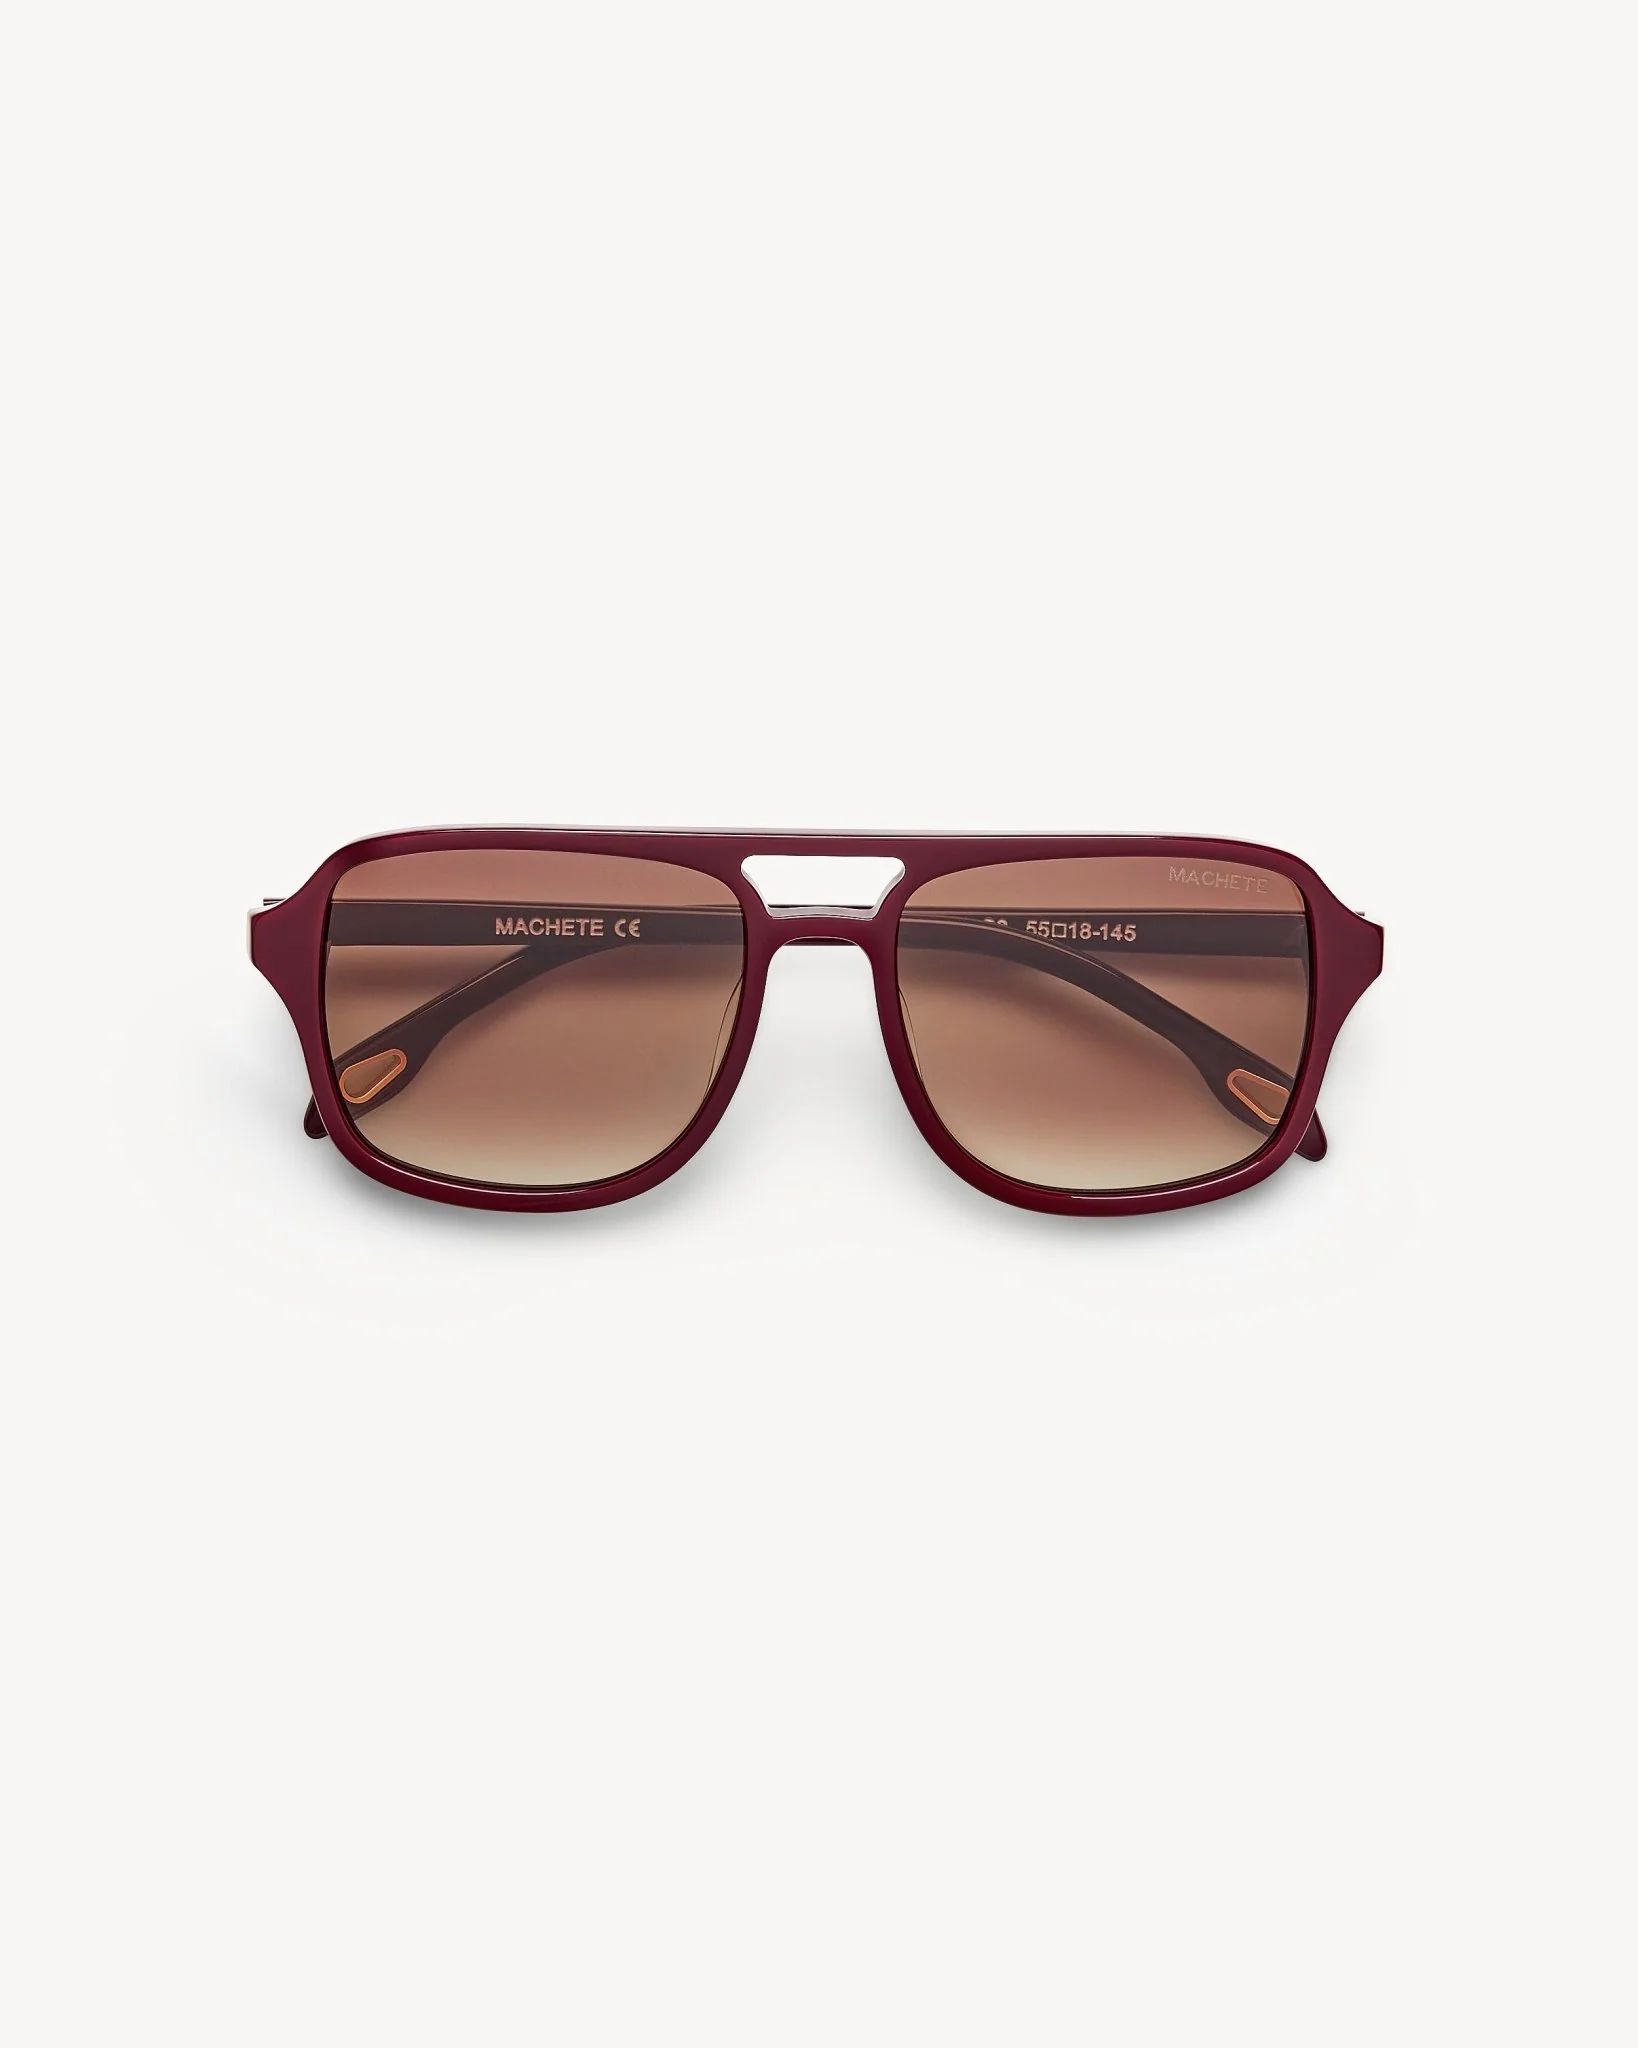 Jane Sunglasses in Oxblood | MACHETE | Machete